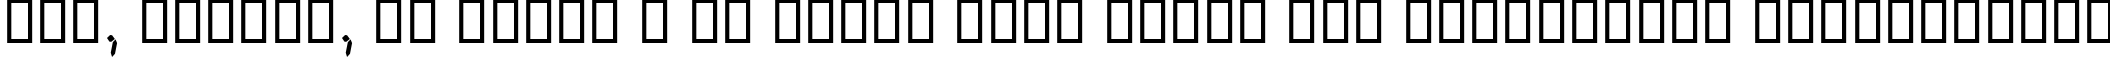 Пример написания шрифтом B Elm Italic текста на украинском